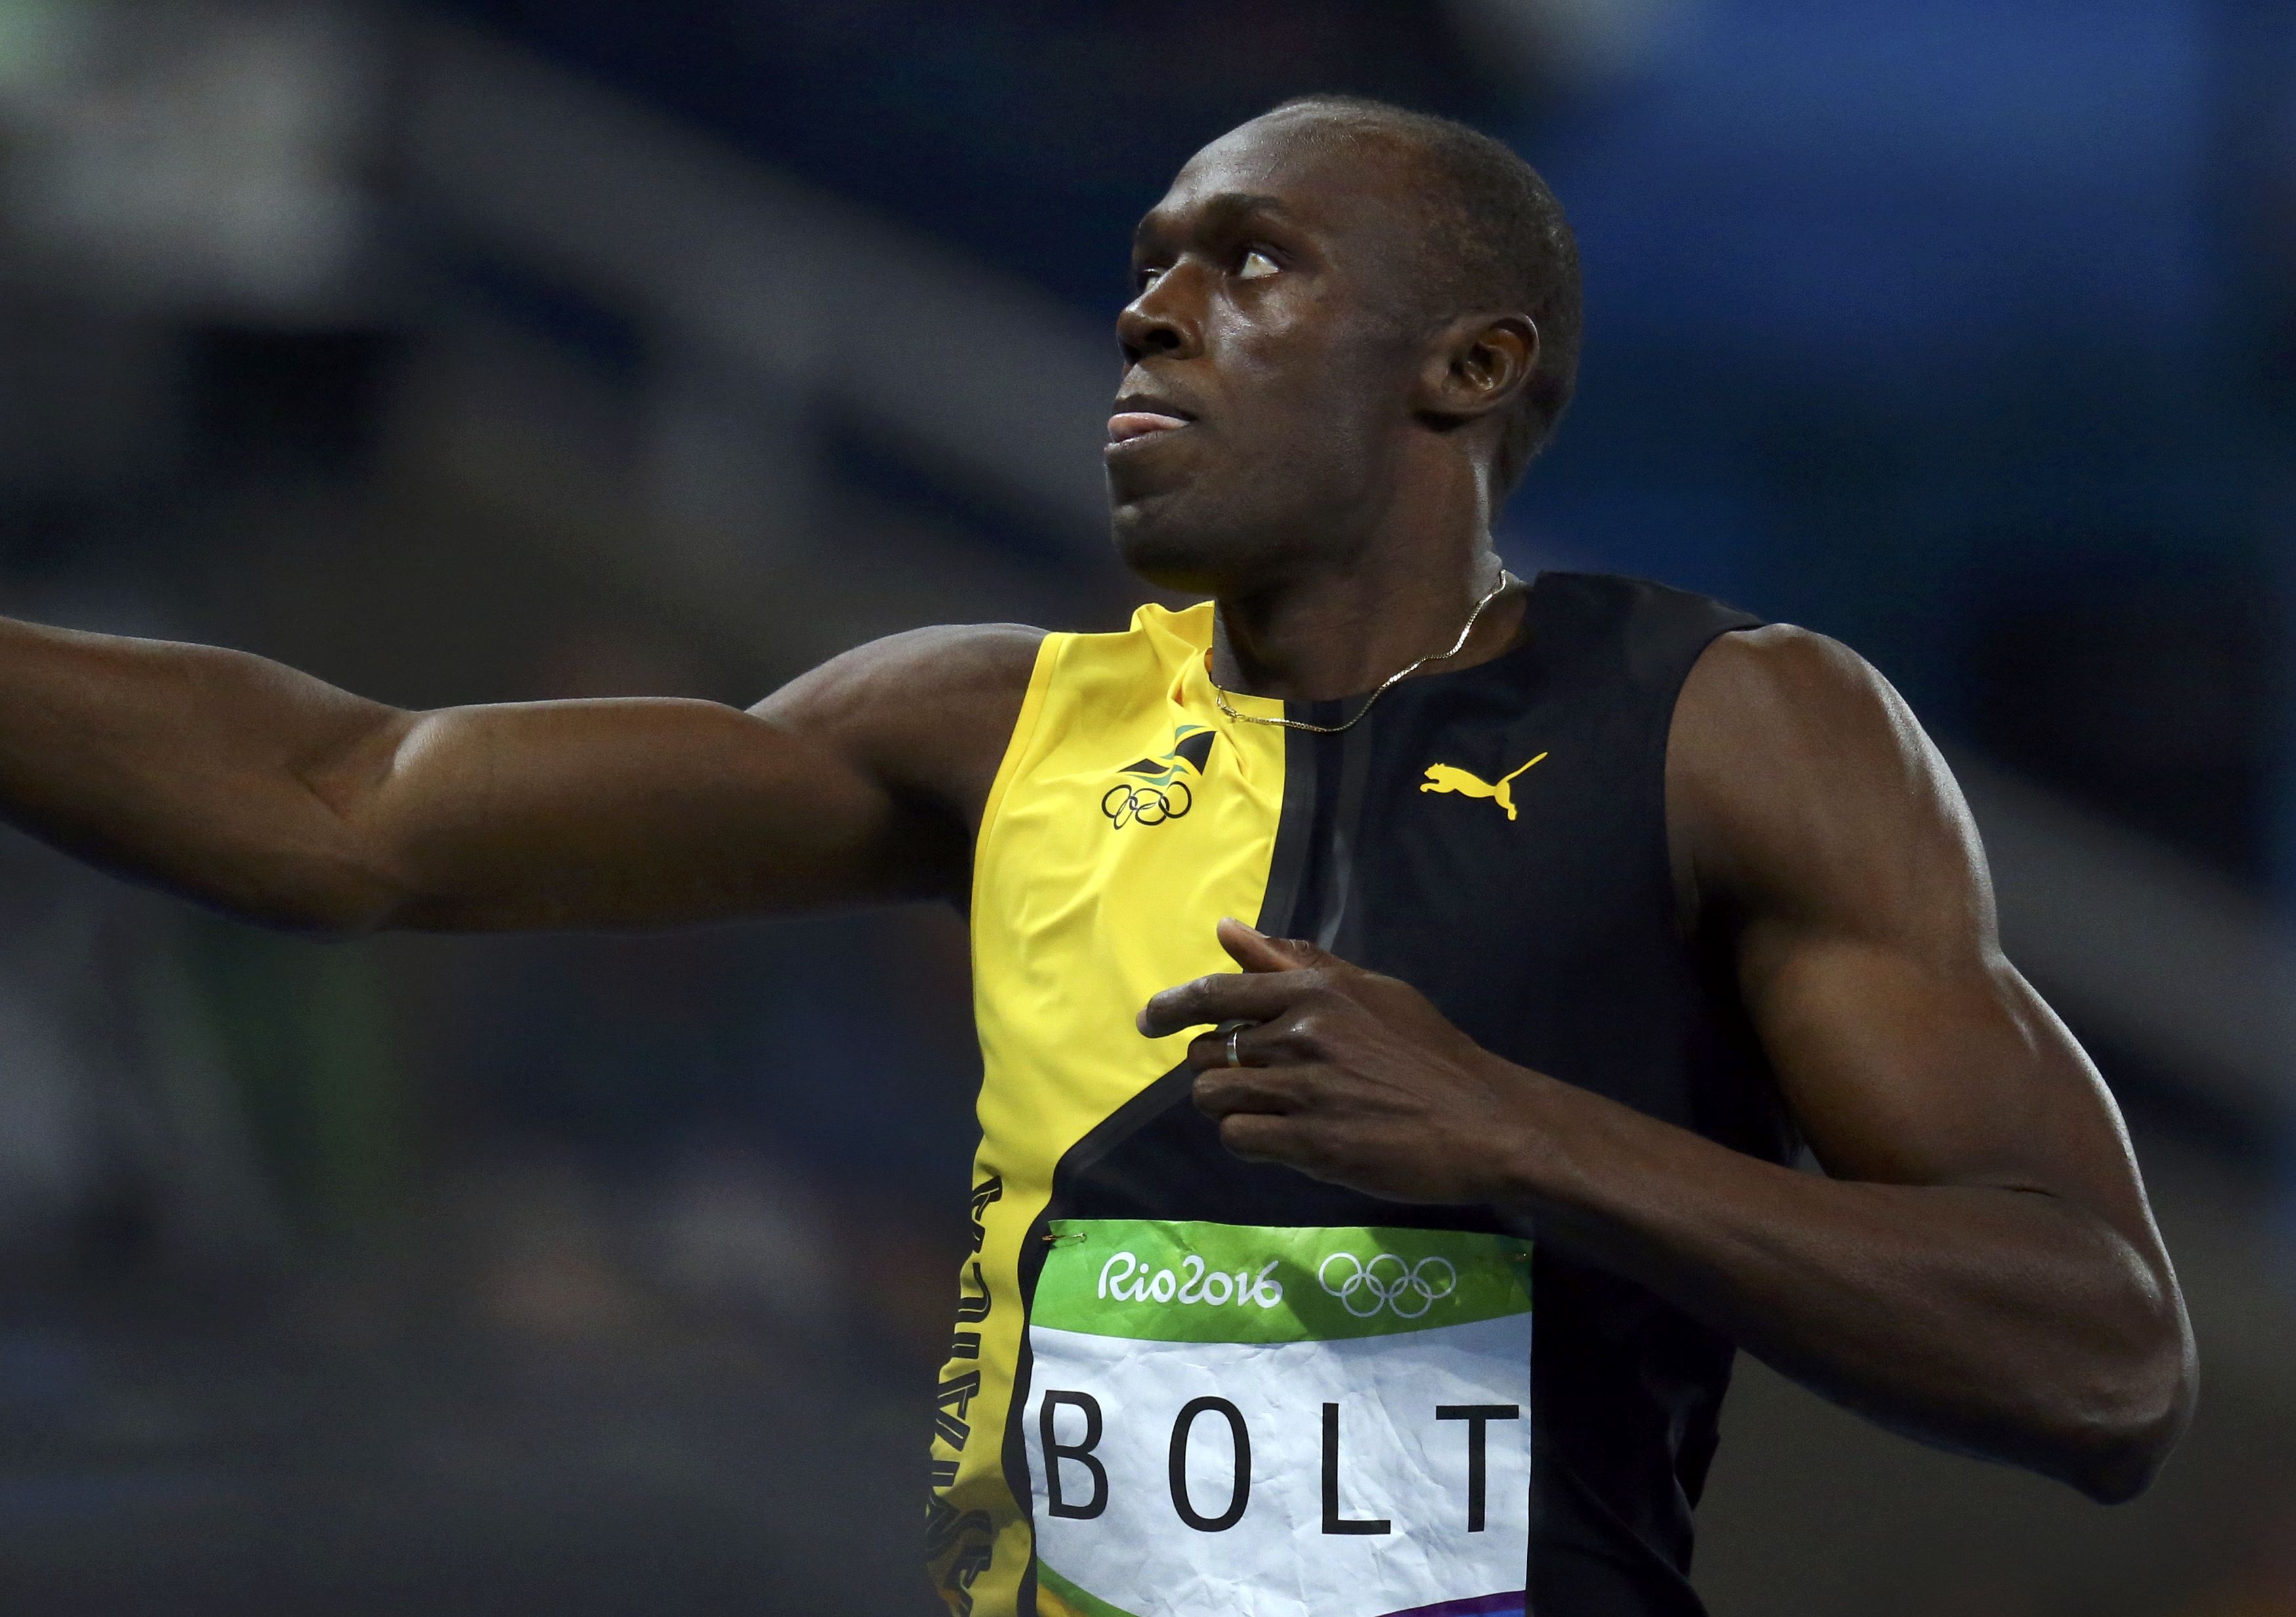 Tercer oro olímpico para Bolt en 100 metros en Río 2016